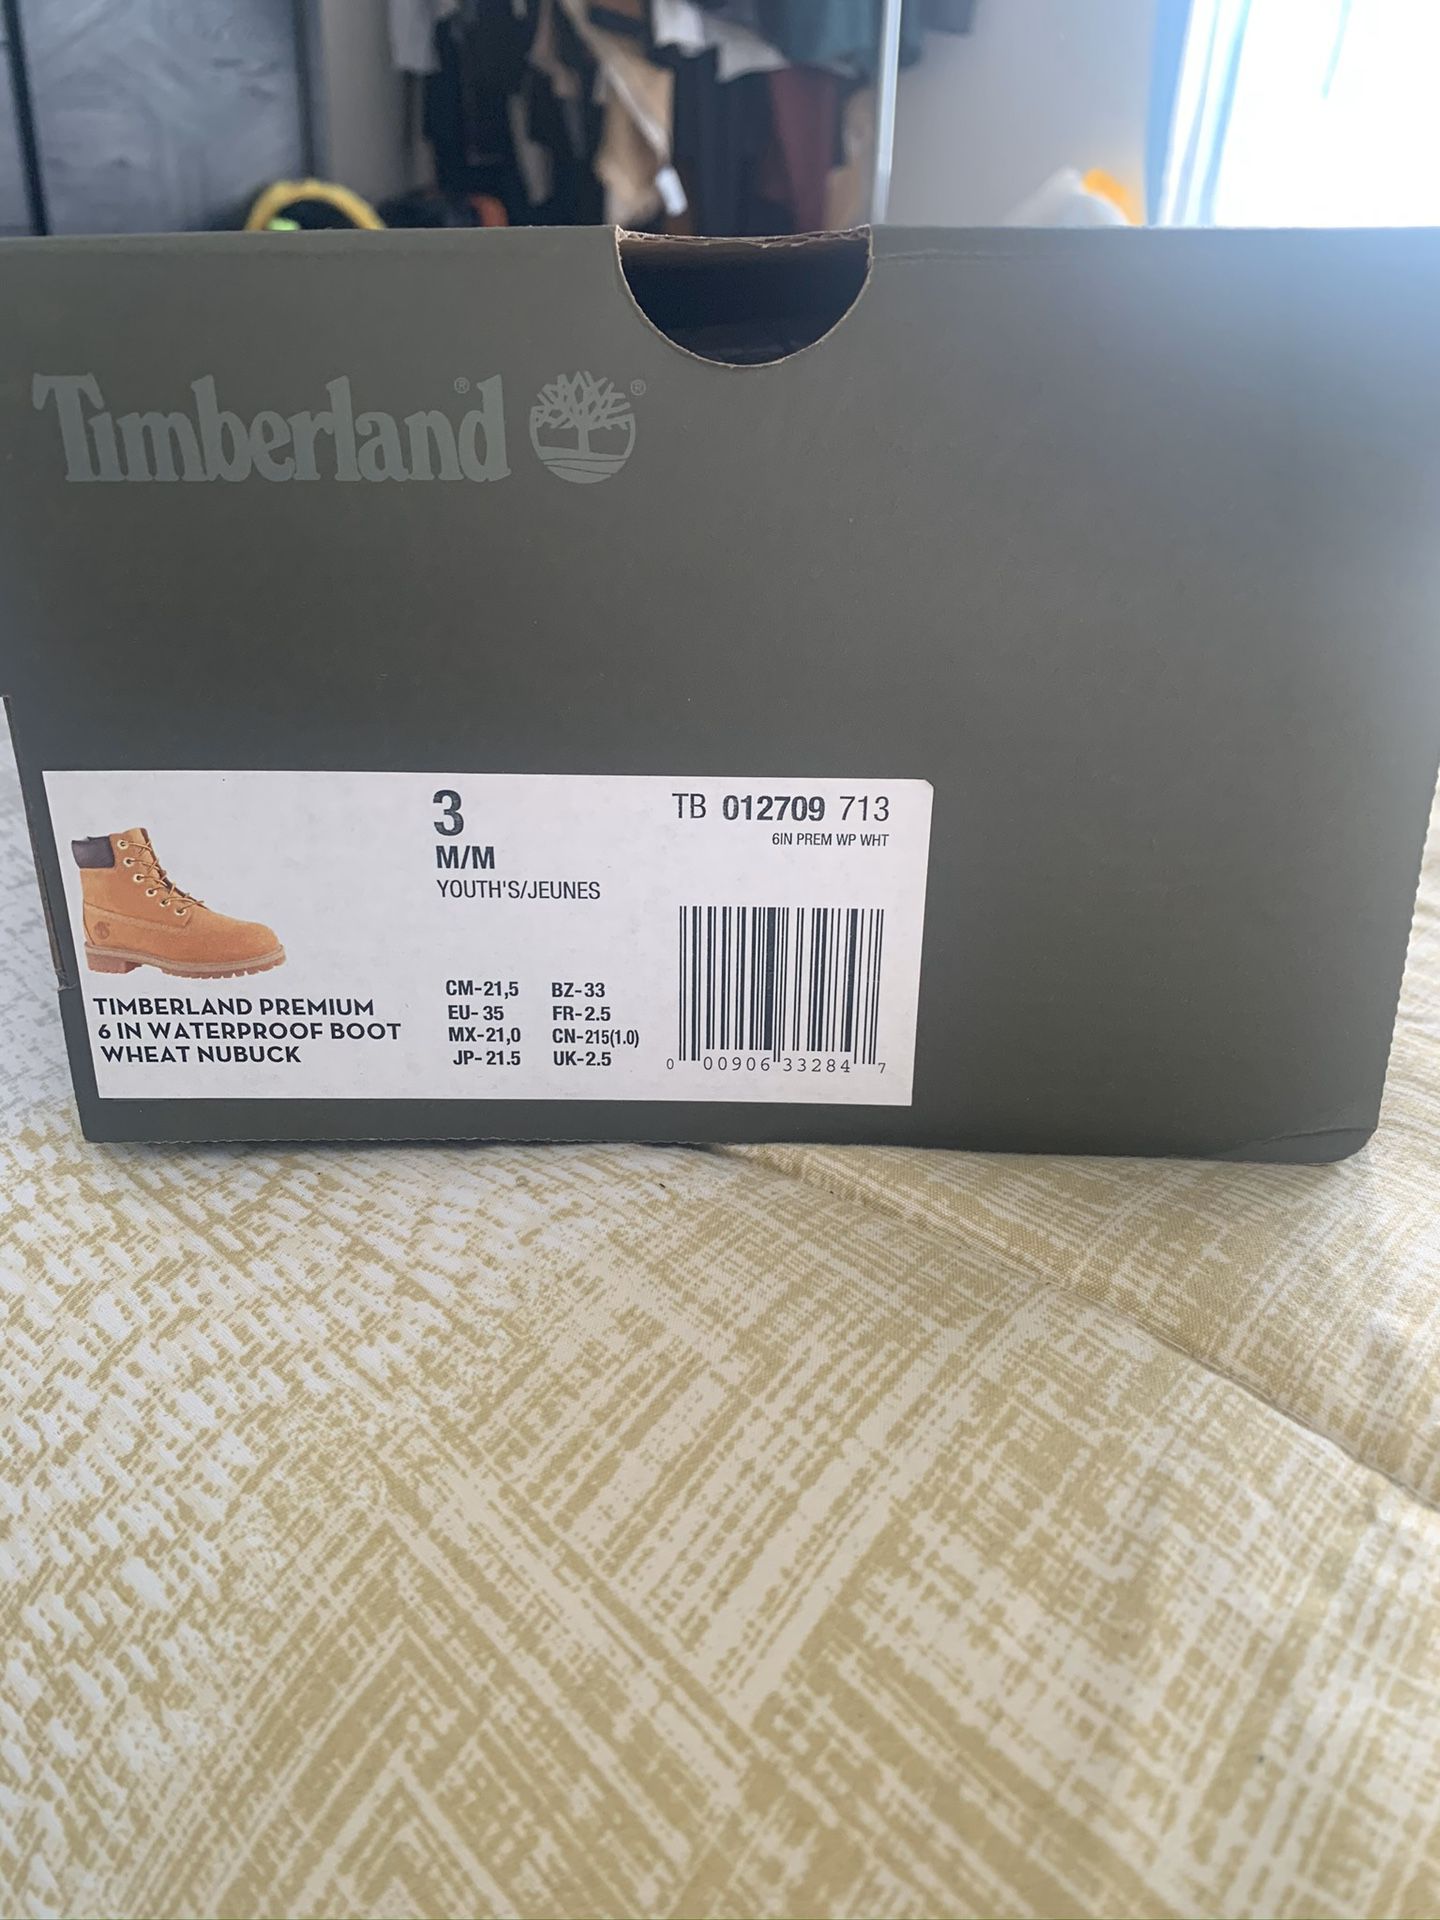 Timberland Premium 6in Waterproof Wheat Nubuck Size 3 M/M Youth